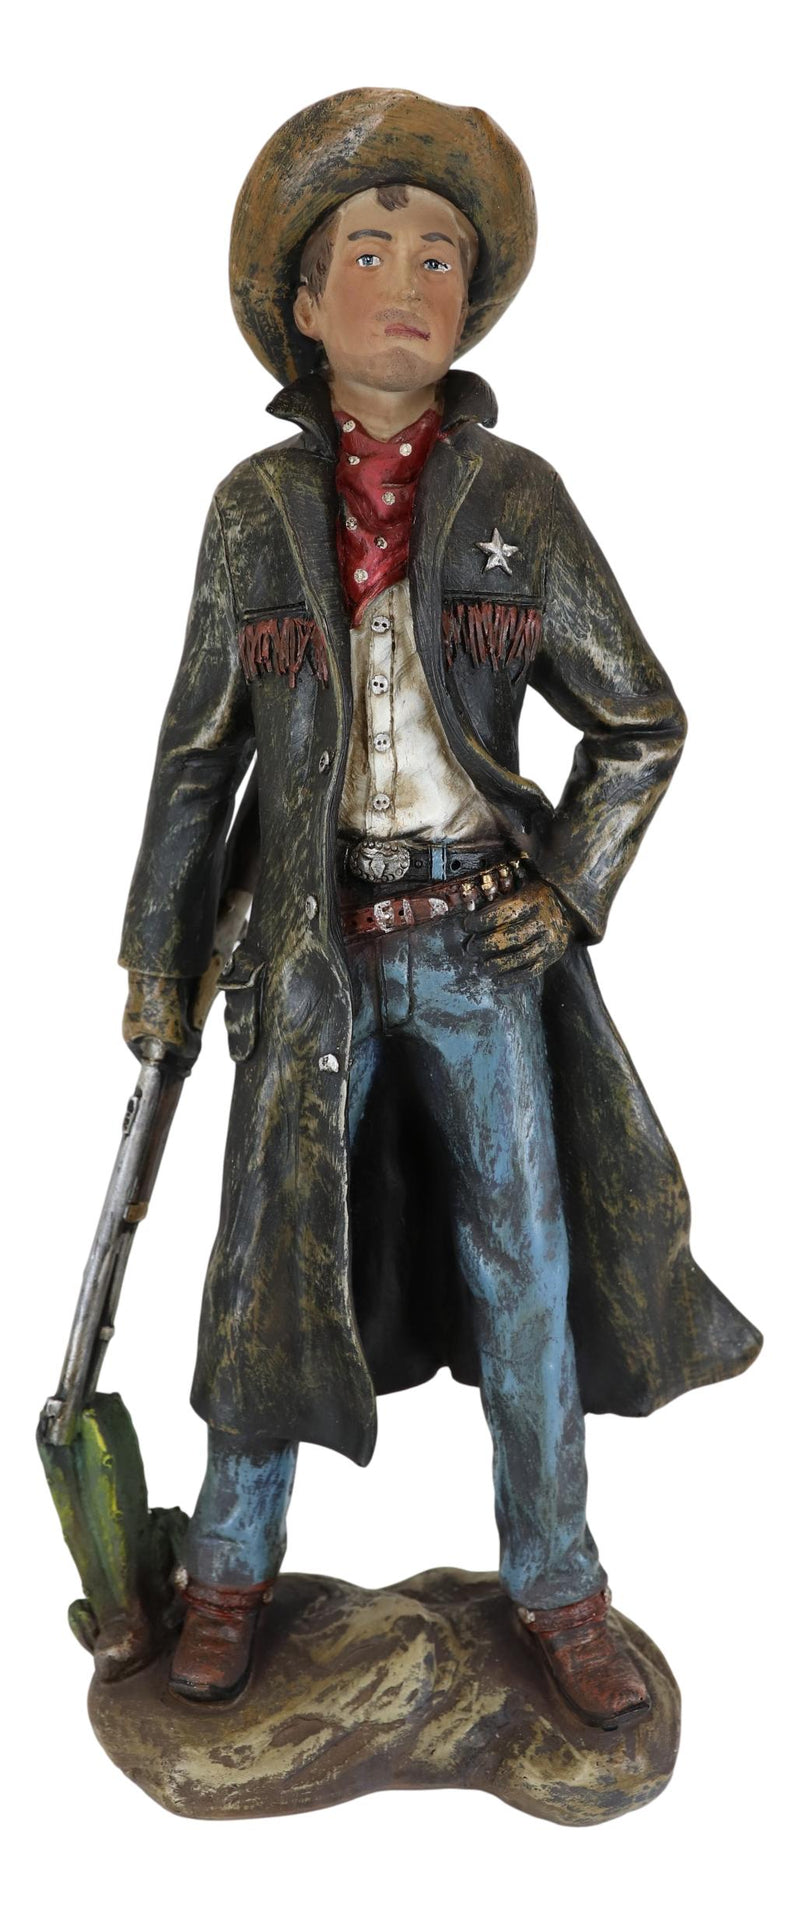 Western Cowboy Sheriff In US Marshall Long Coat Holding Shotgun Rifle Figurine